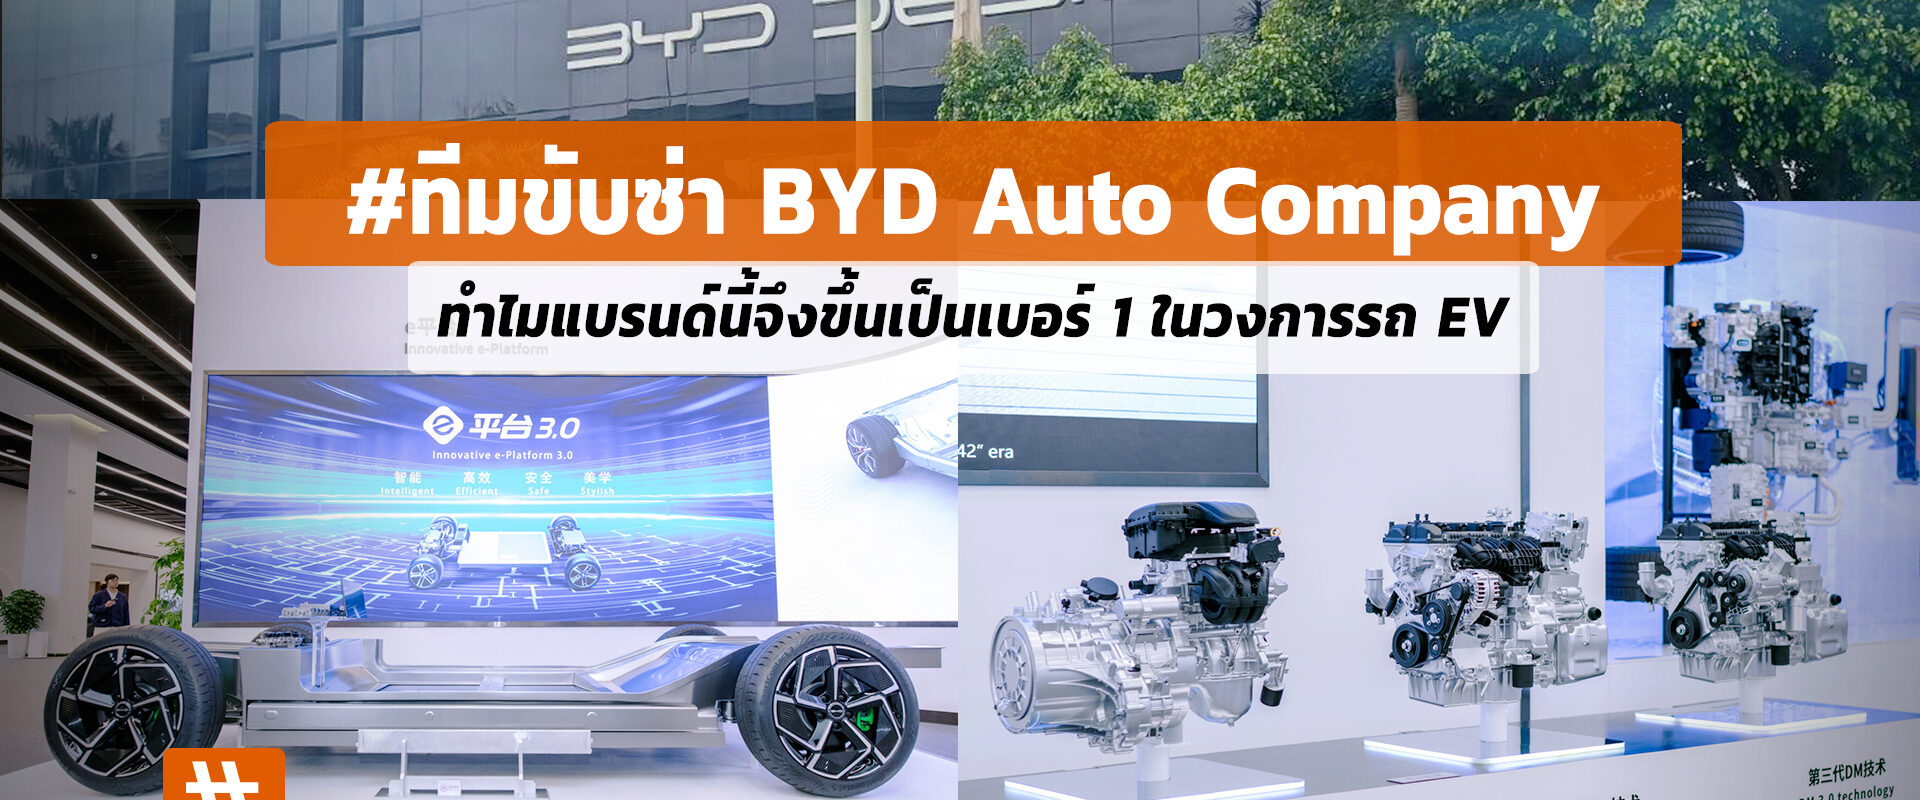 BYD Auto Company